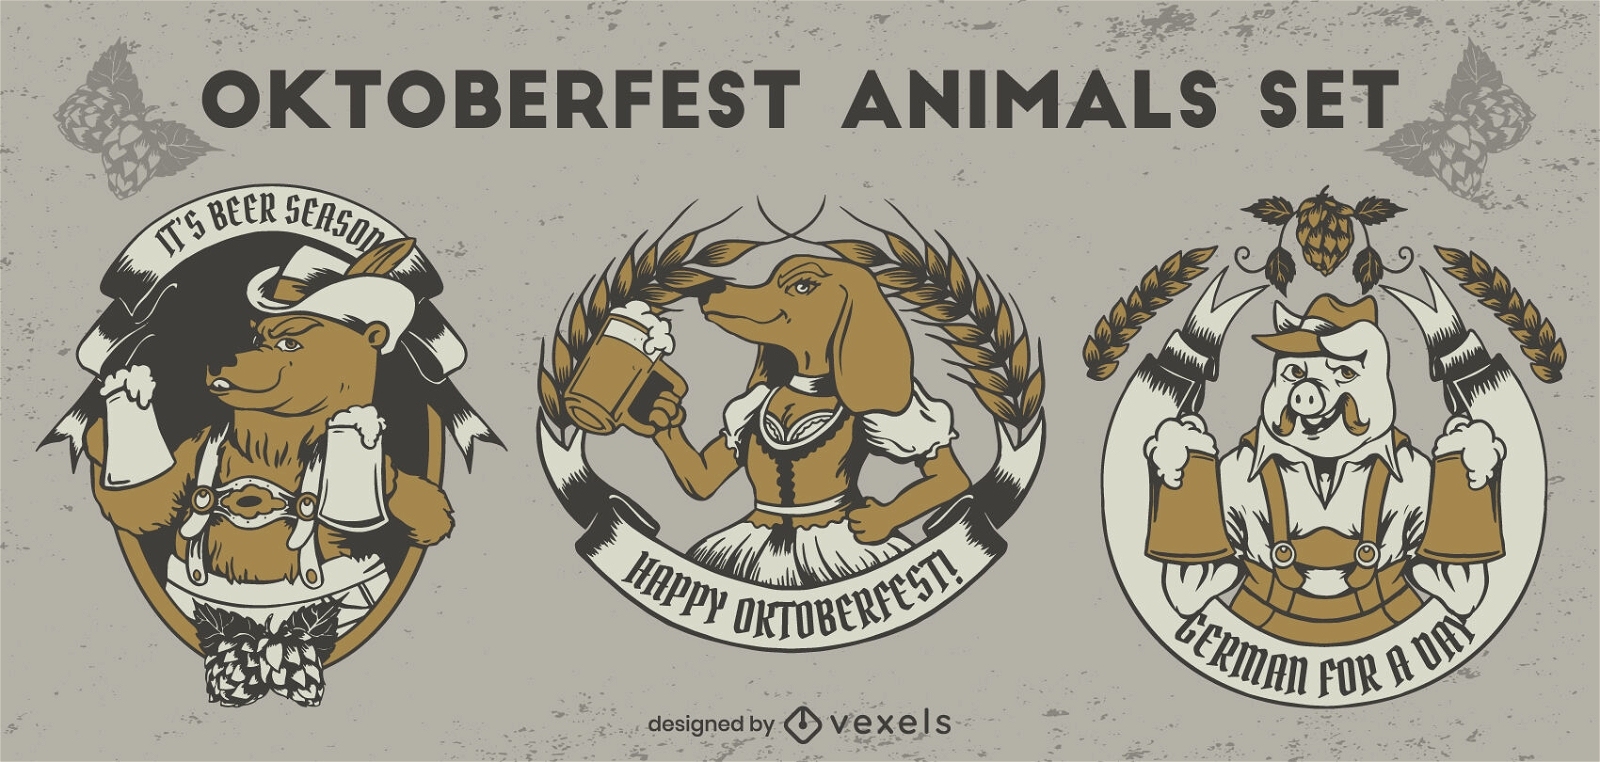 Oktoberfest animal set